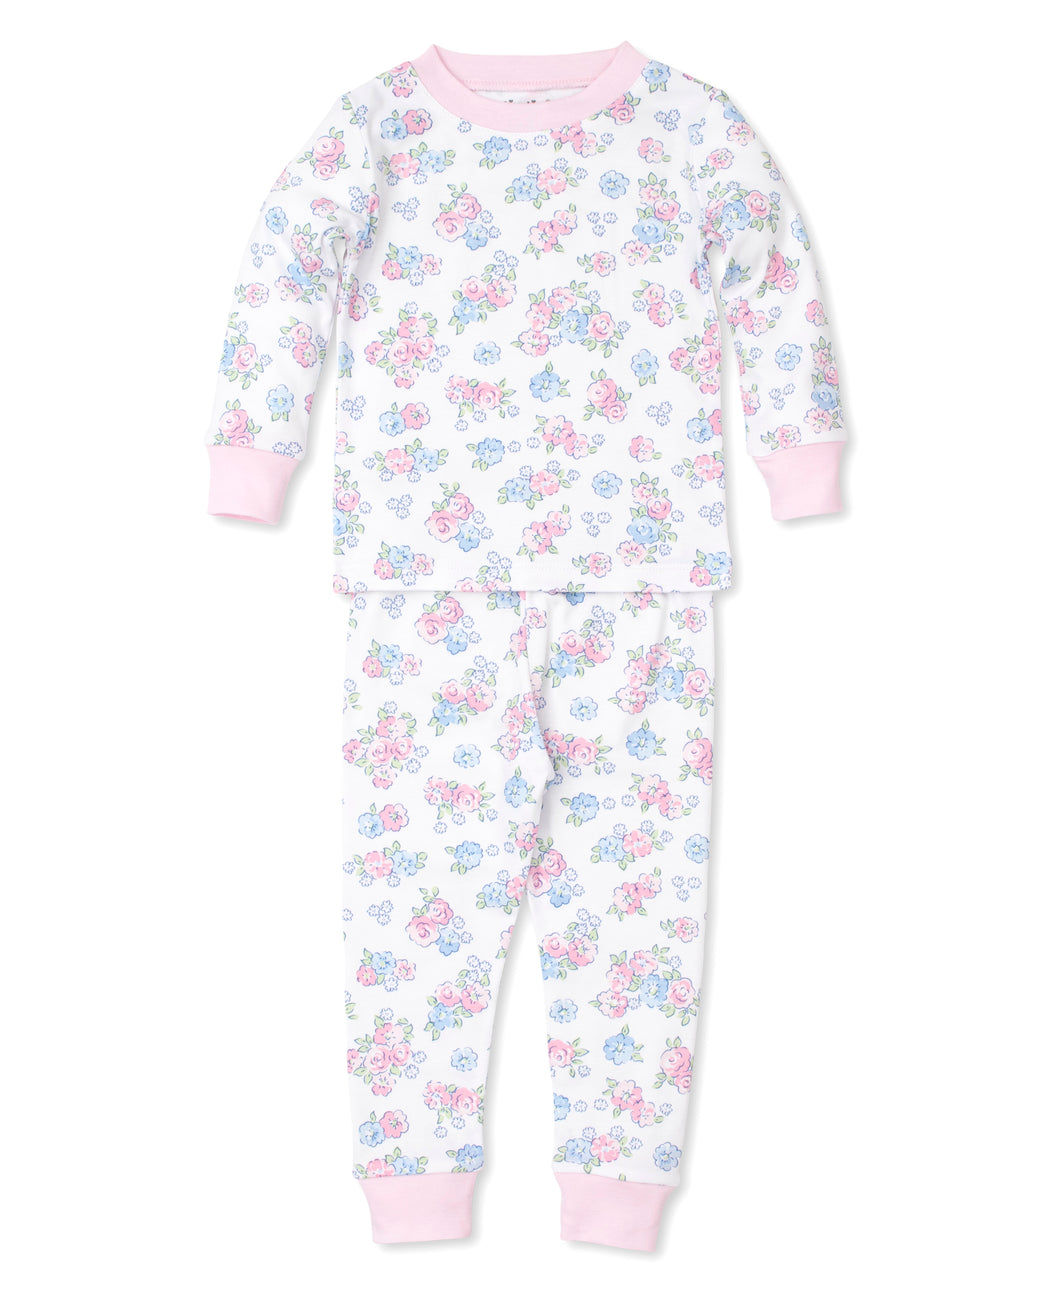 PJs Blue Blossoms Pajama Set Snug PRT - Multi